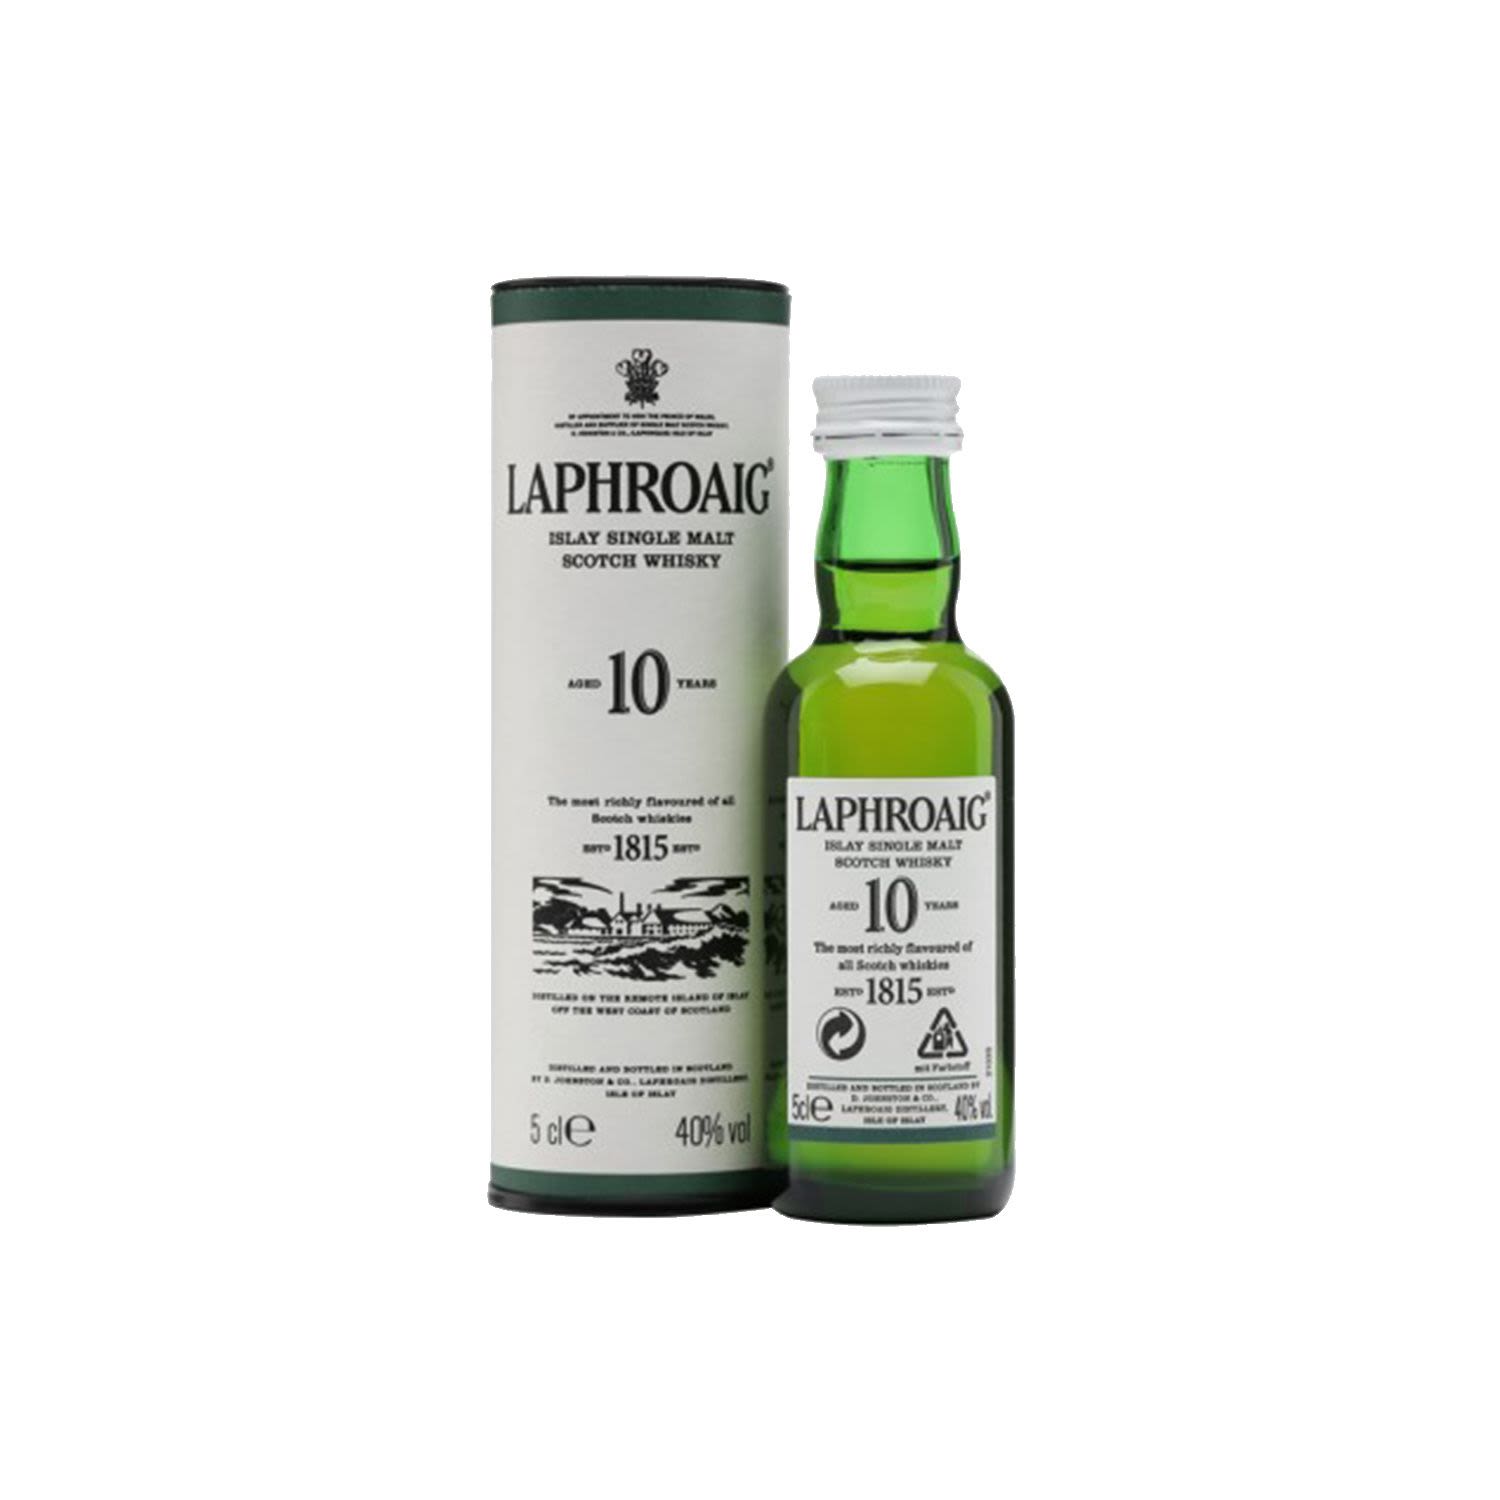 Laphroig Single Malt Scotch Whisky 10 Year Old 50mL